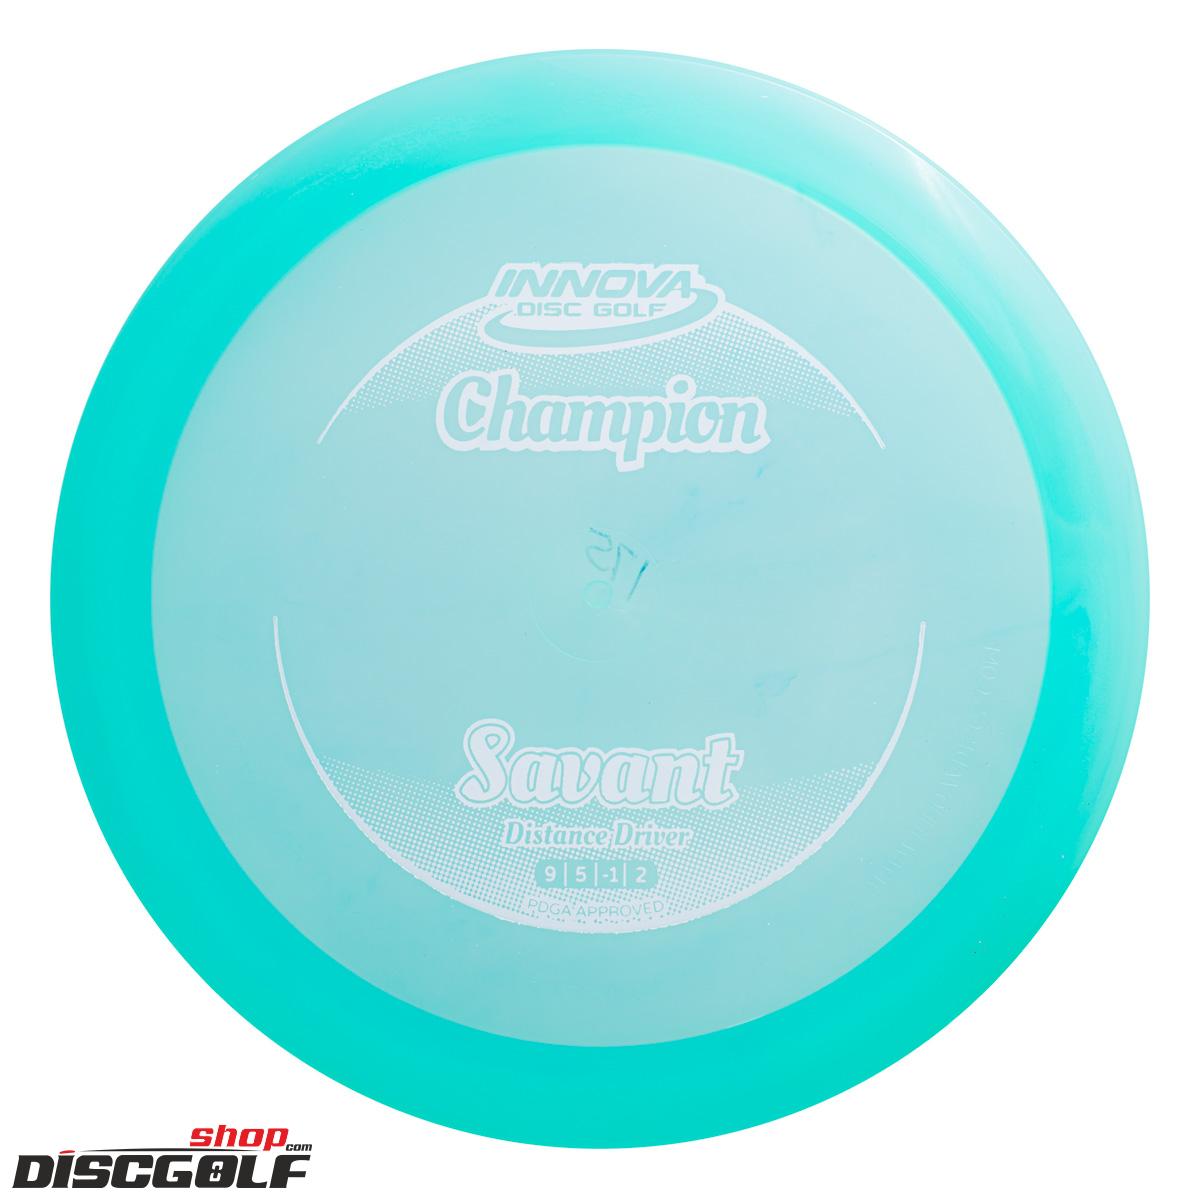 Innova Savant Champion (discgolf)